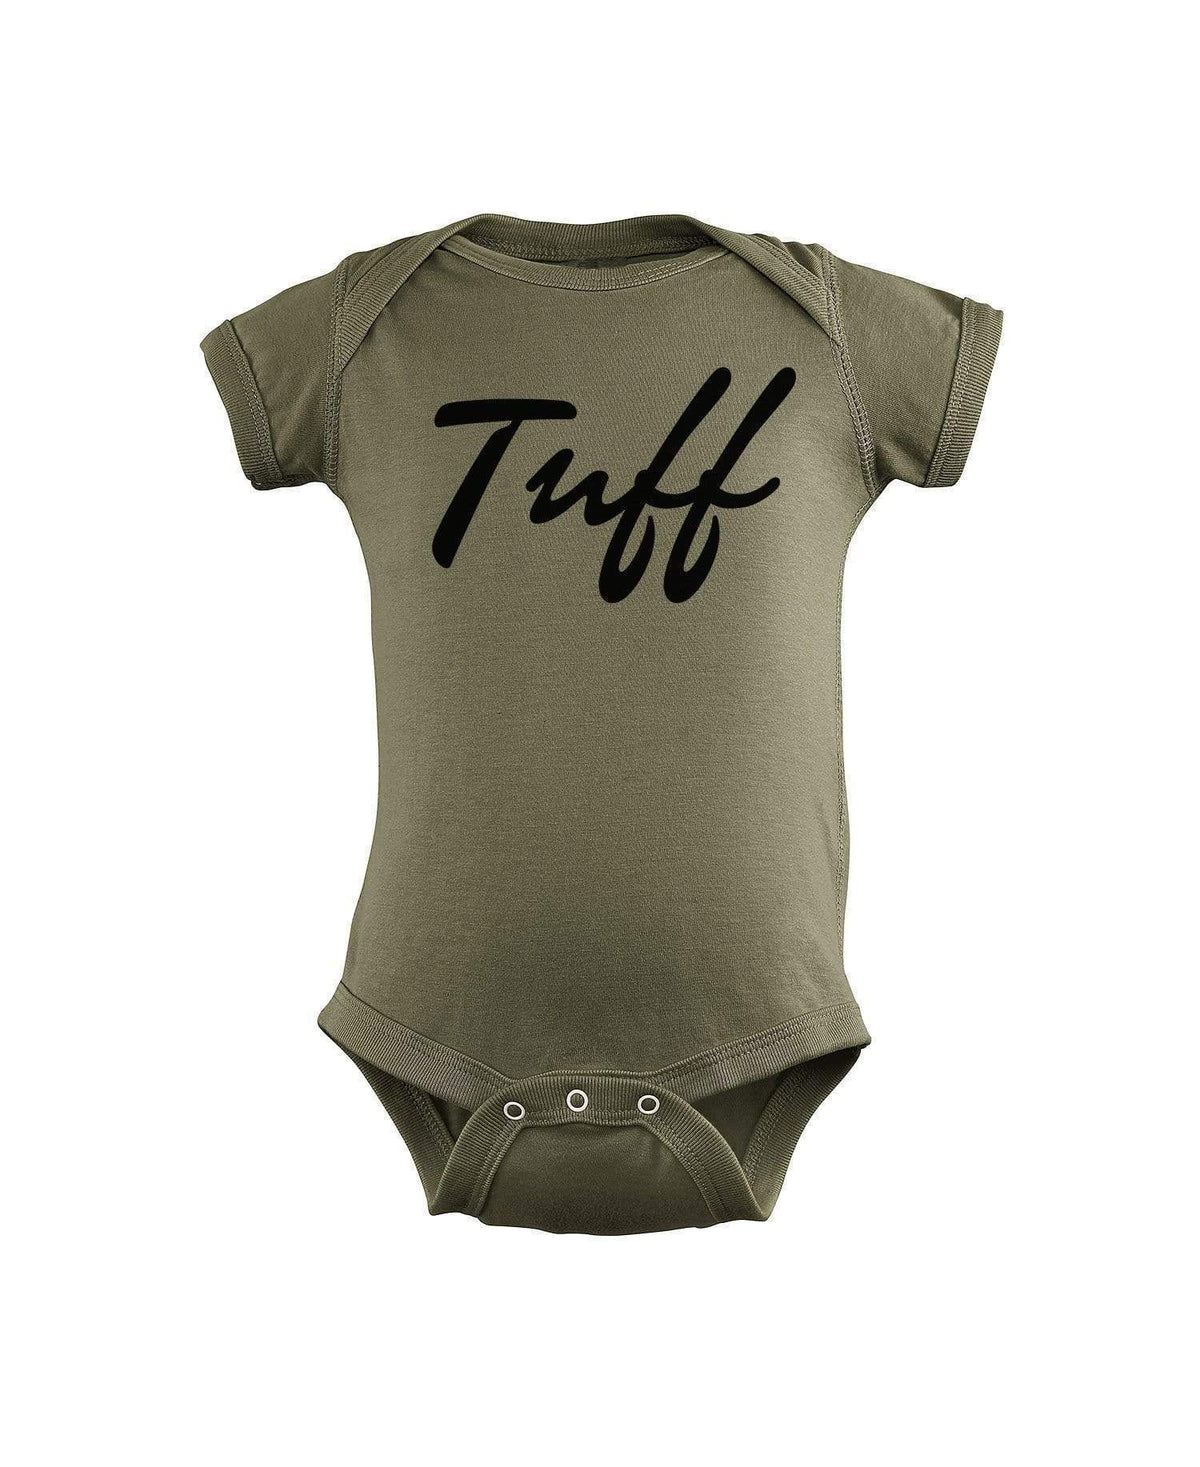 TUFF Thin Script Infant Onesie